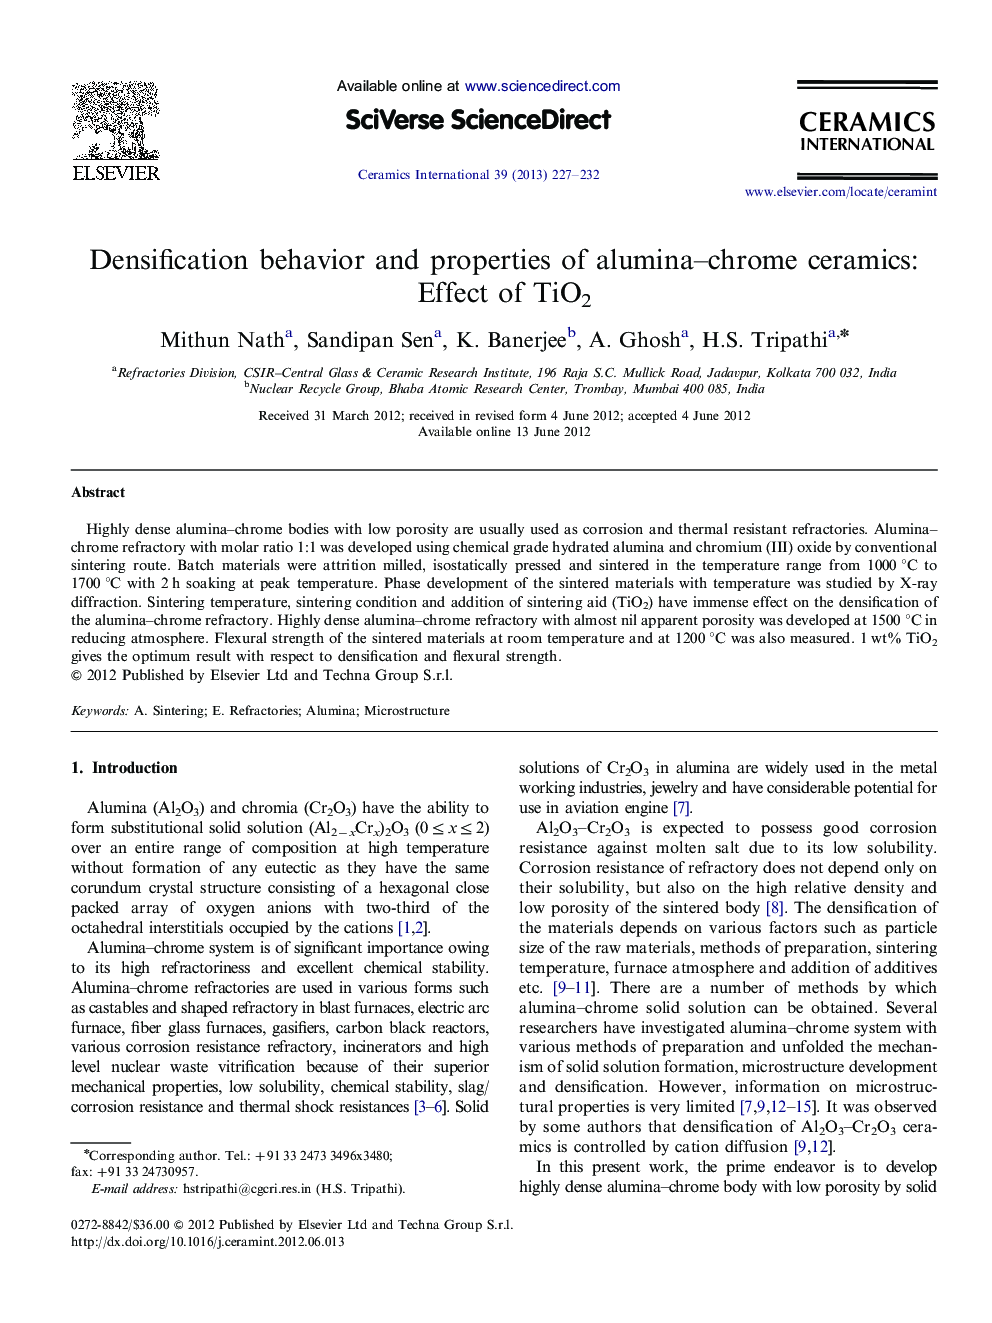 Densification behavior and properties of alumina–chrome ceramics: Effect of TiO2